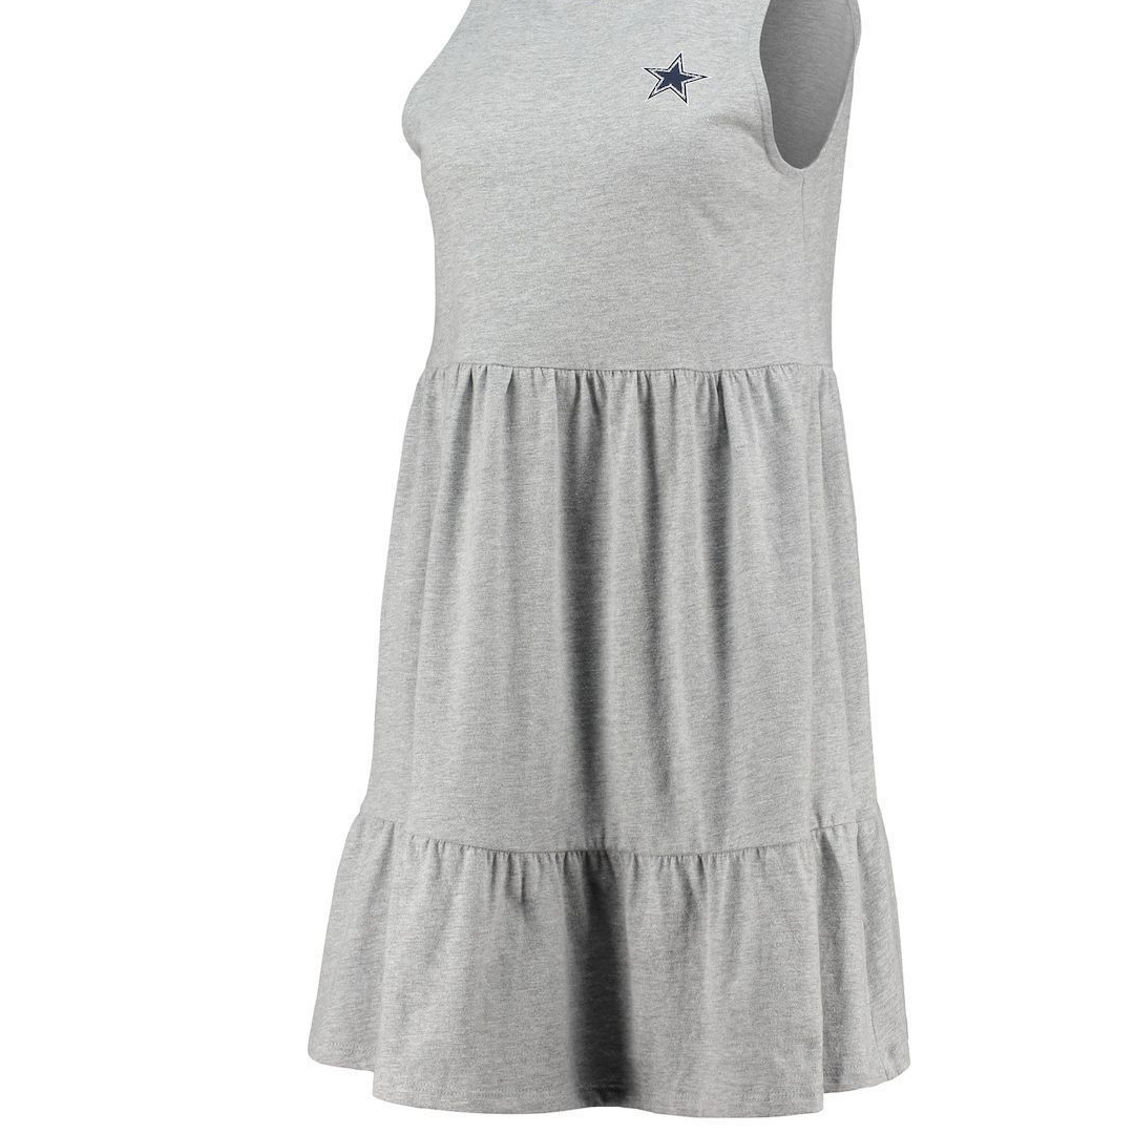 Lauren James Women's Heathered Gray Dallas Cowboys Tiered Dress - Image 3 of 4